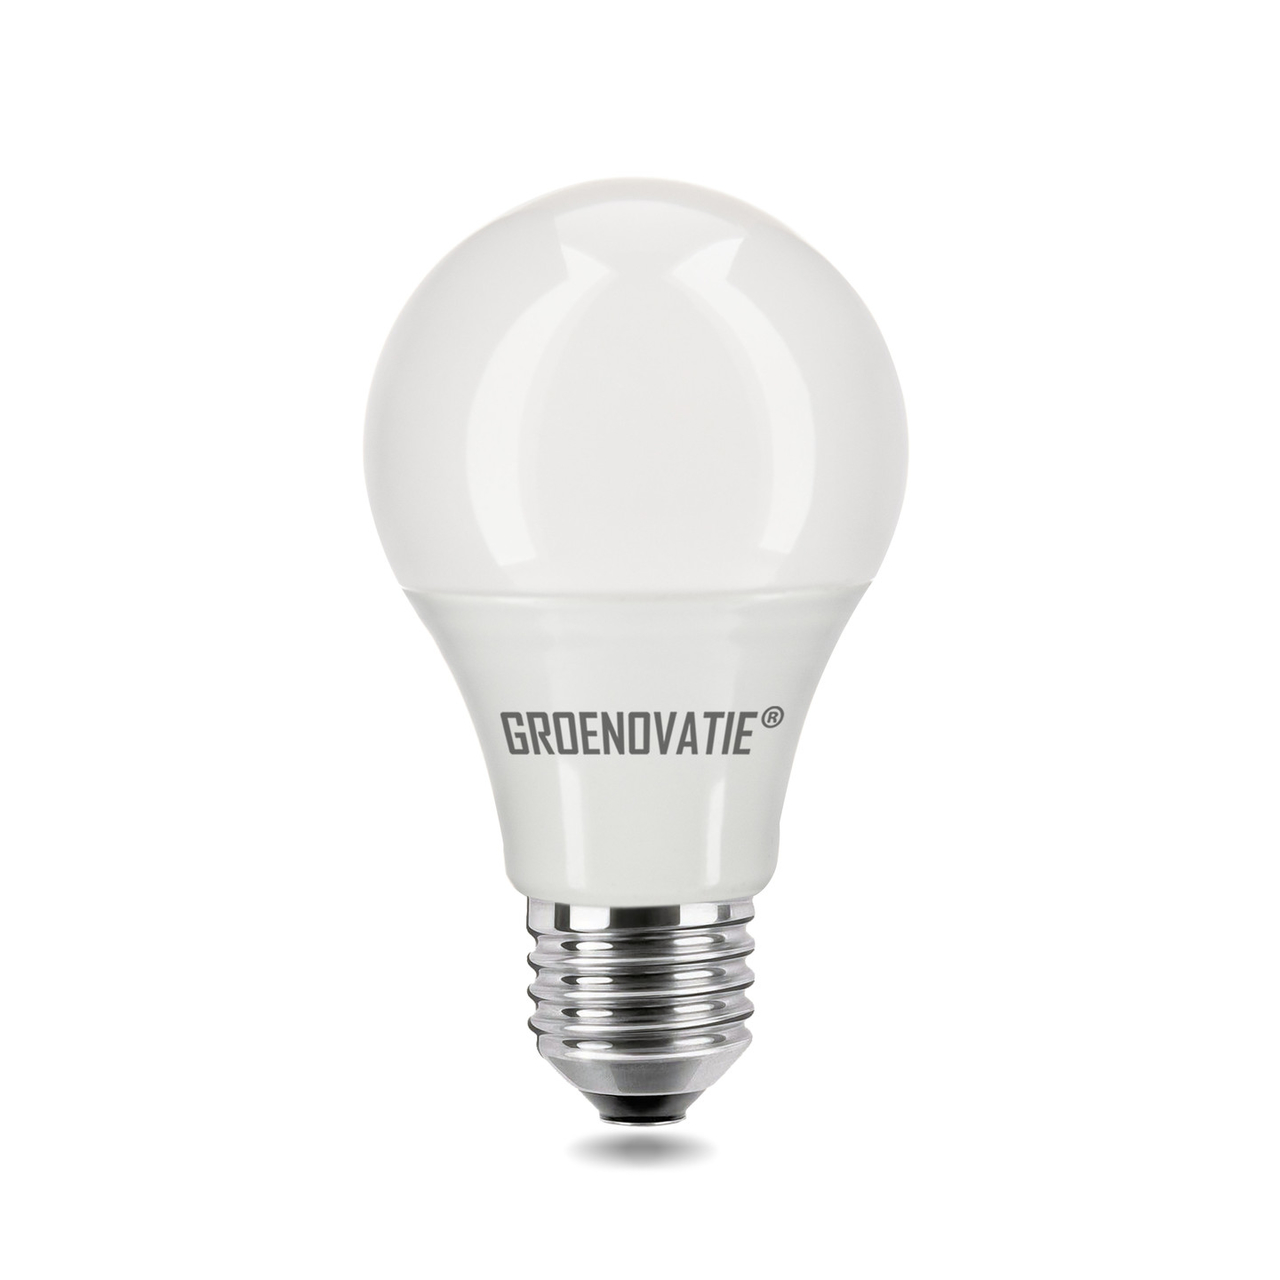 Broers en zussen Opiaat bijstand E27 LED Lamp 7W Warm Wit - LEDlampen kopen E27